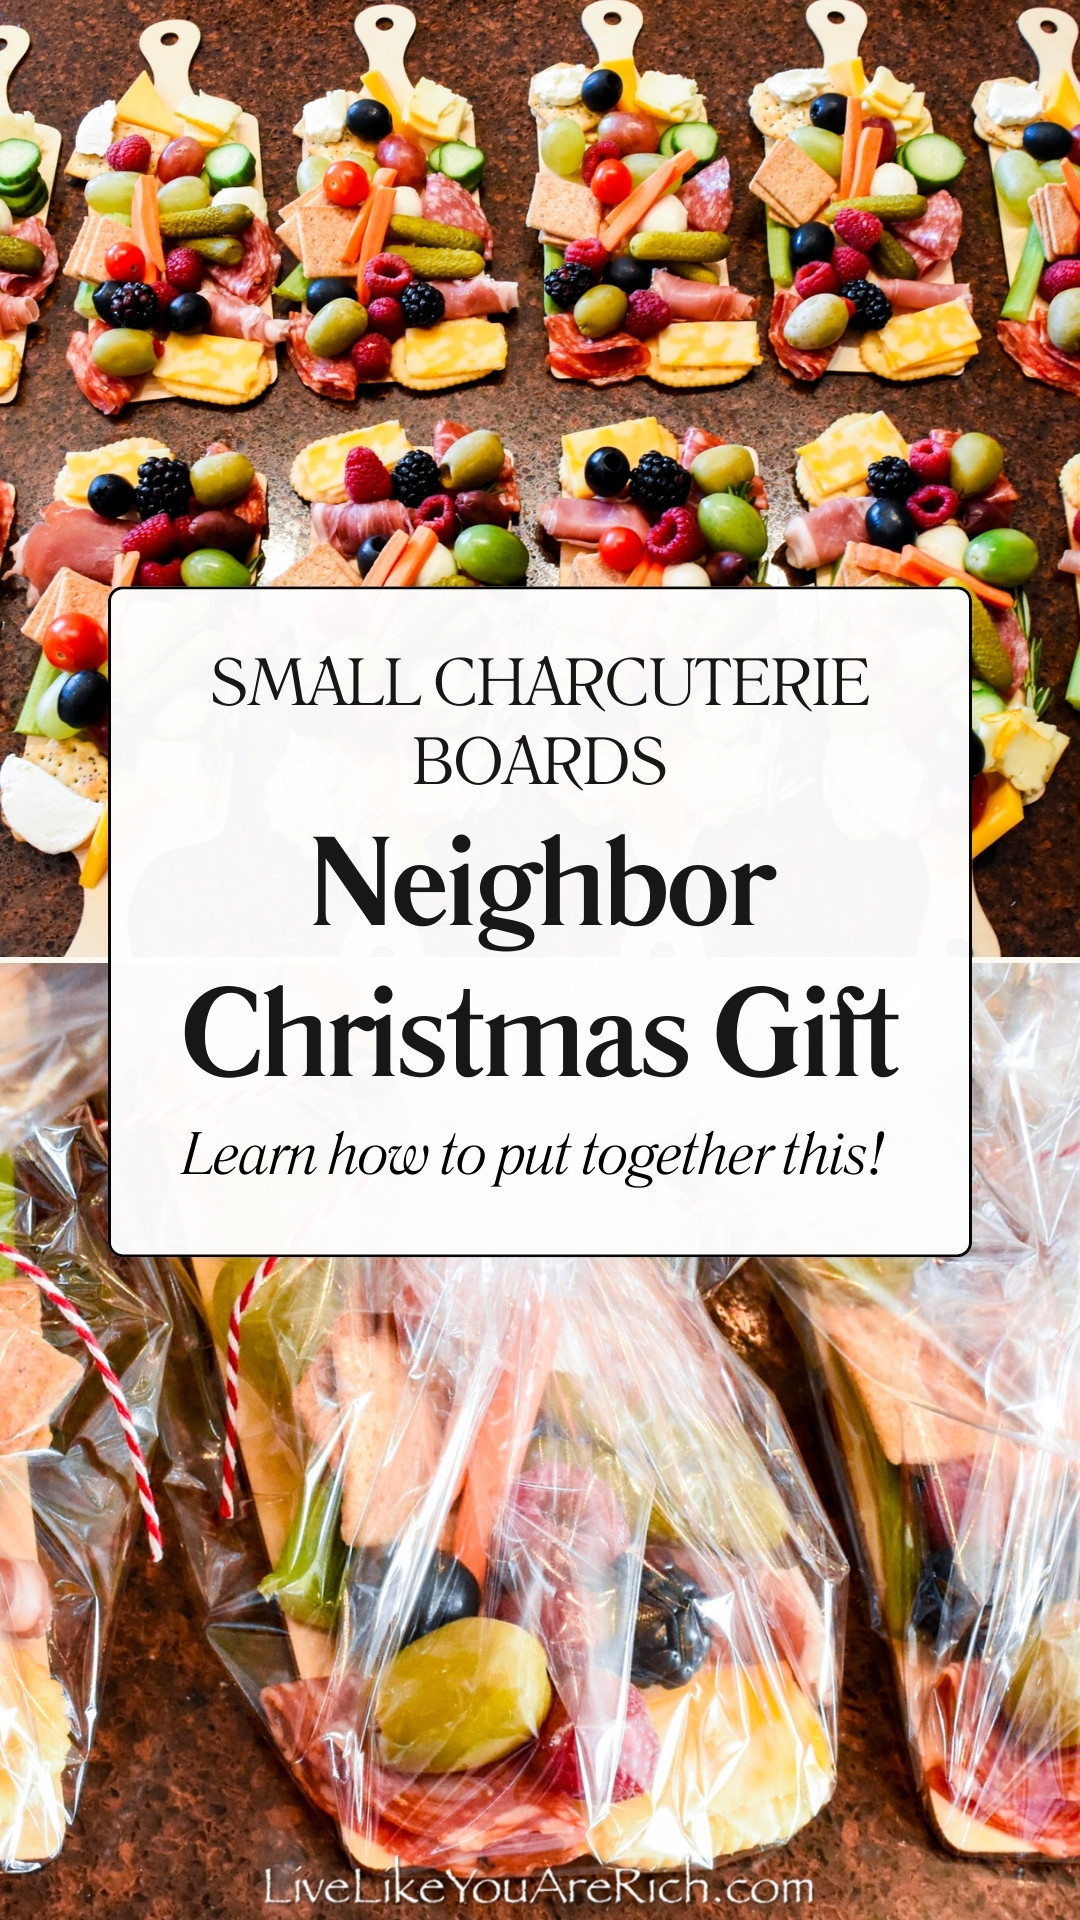 Neighbor Christmas Gift Small Charcuterie Boards